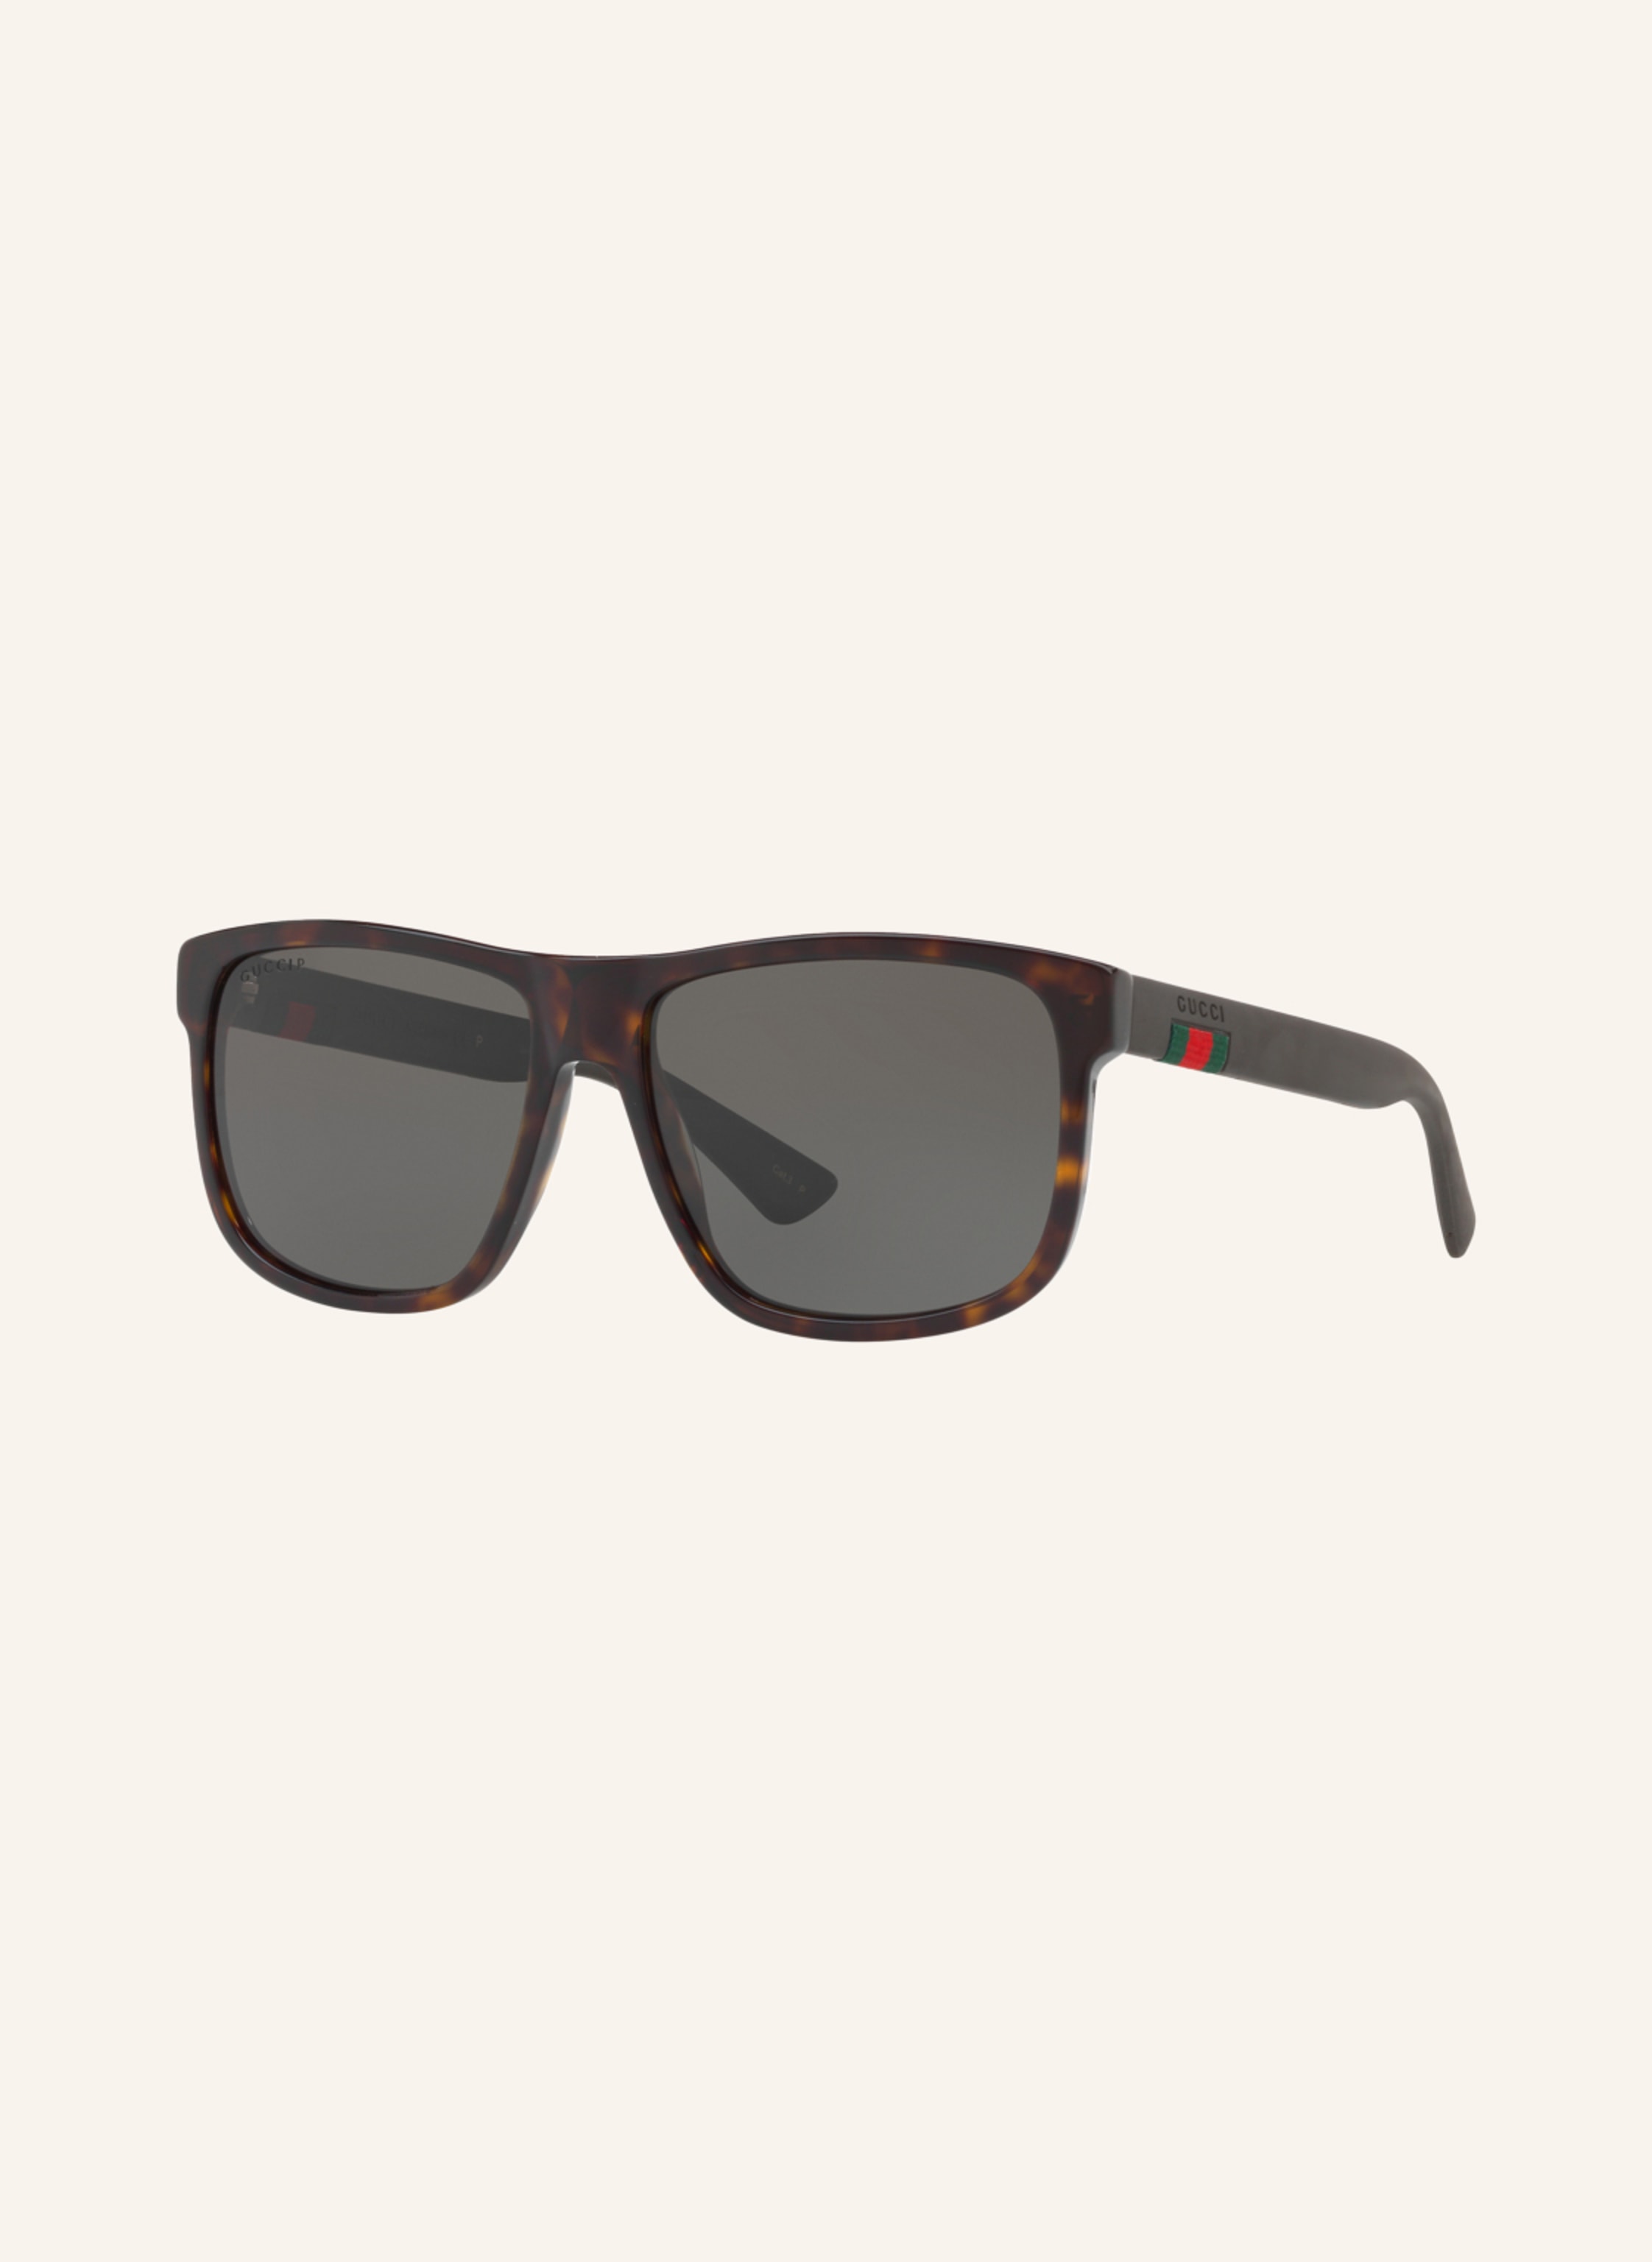 Gucci™ Eyewear | Sunglasses, Sunglass photography, Gucci fashion